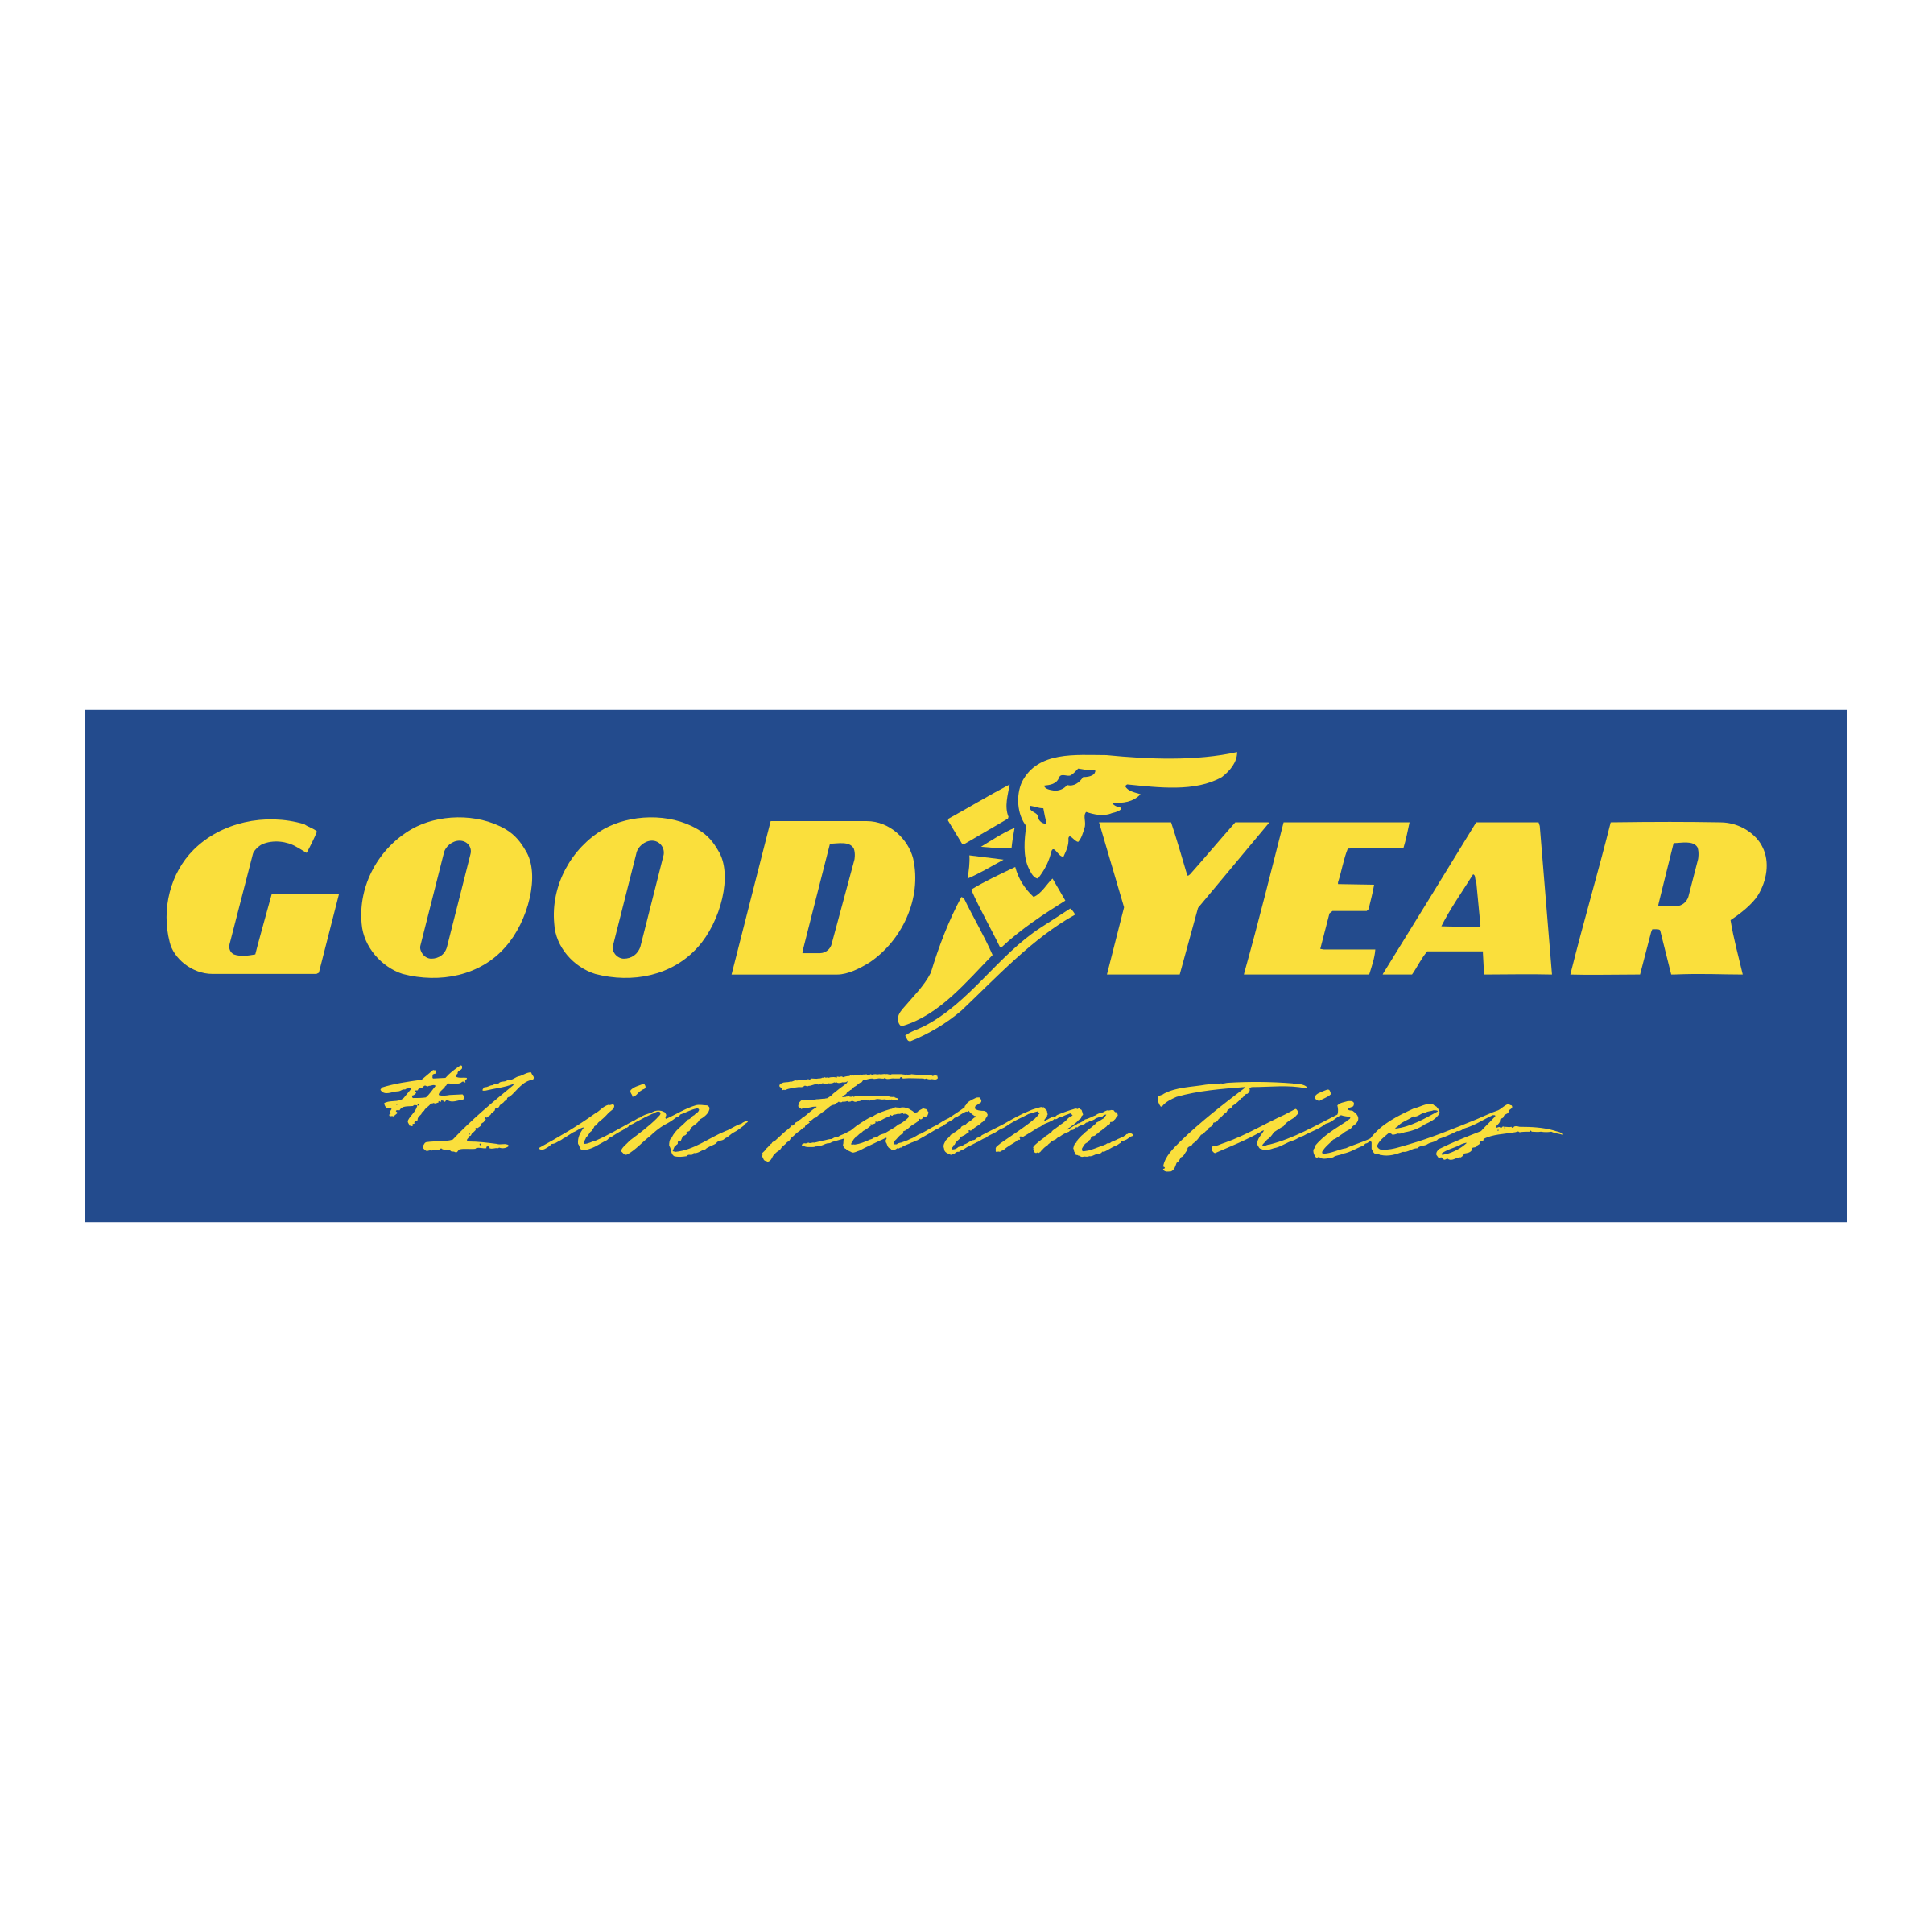 Goodyear logotipo